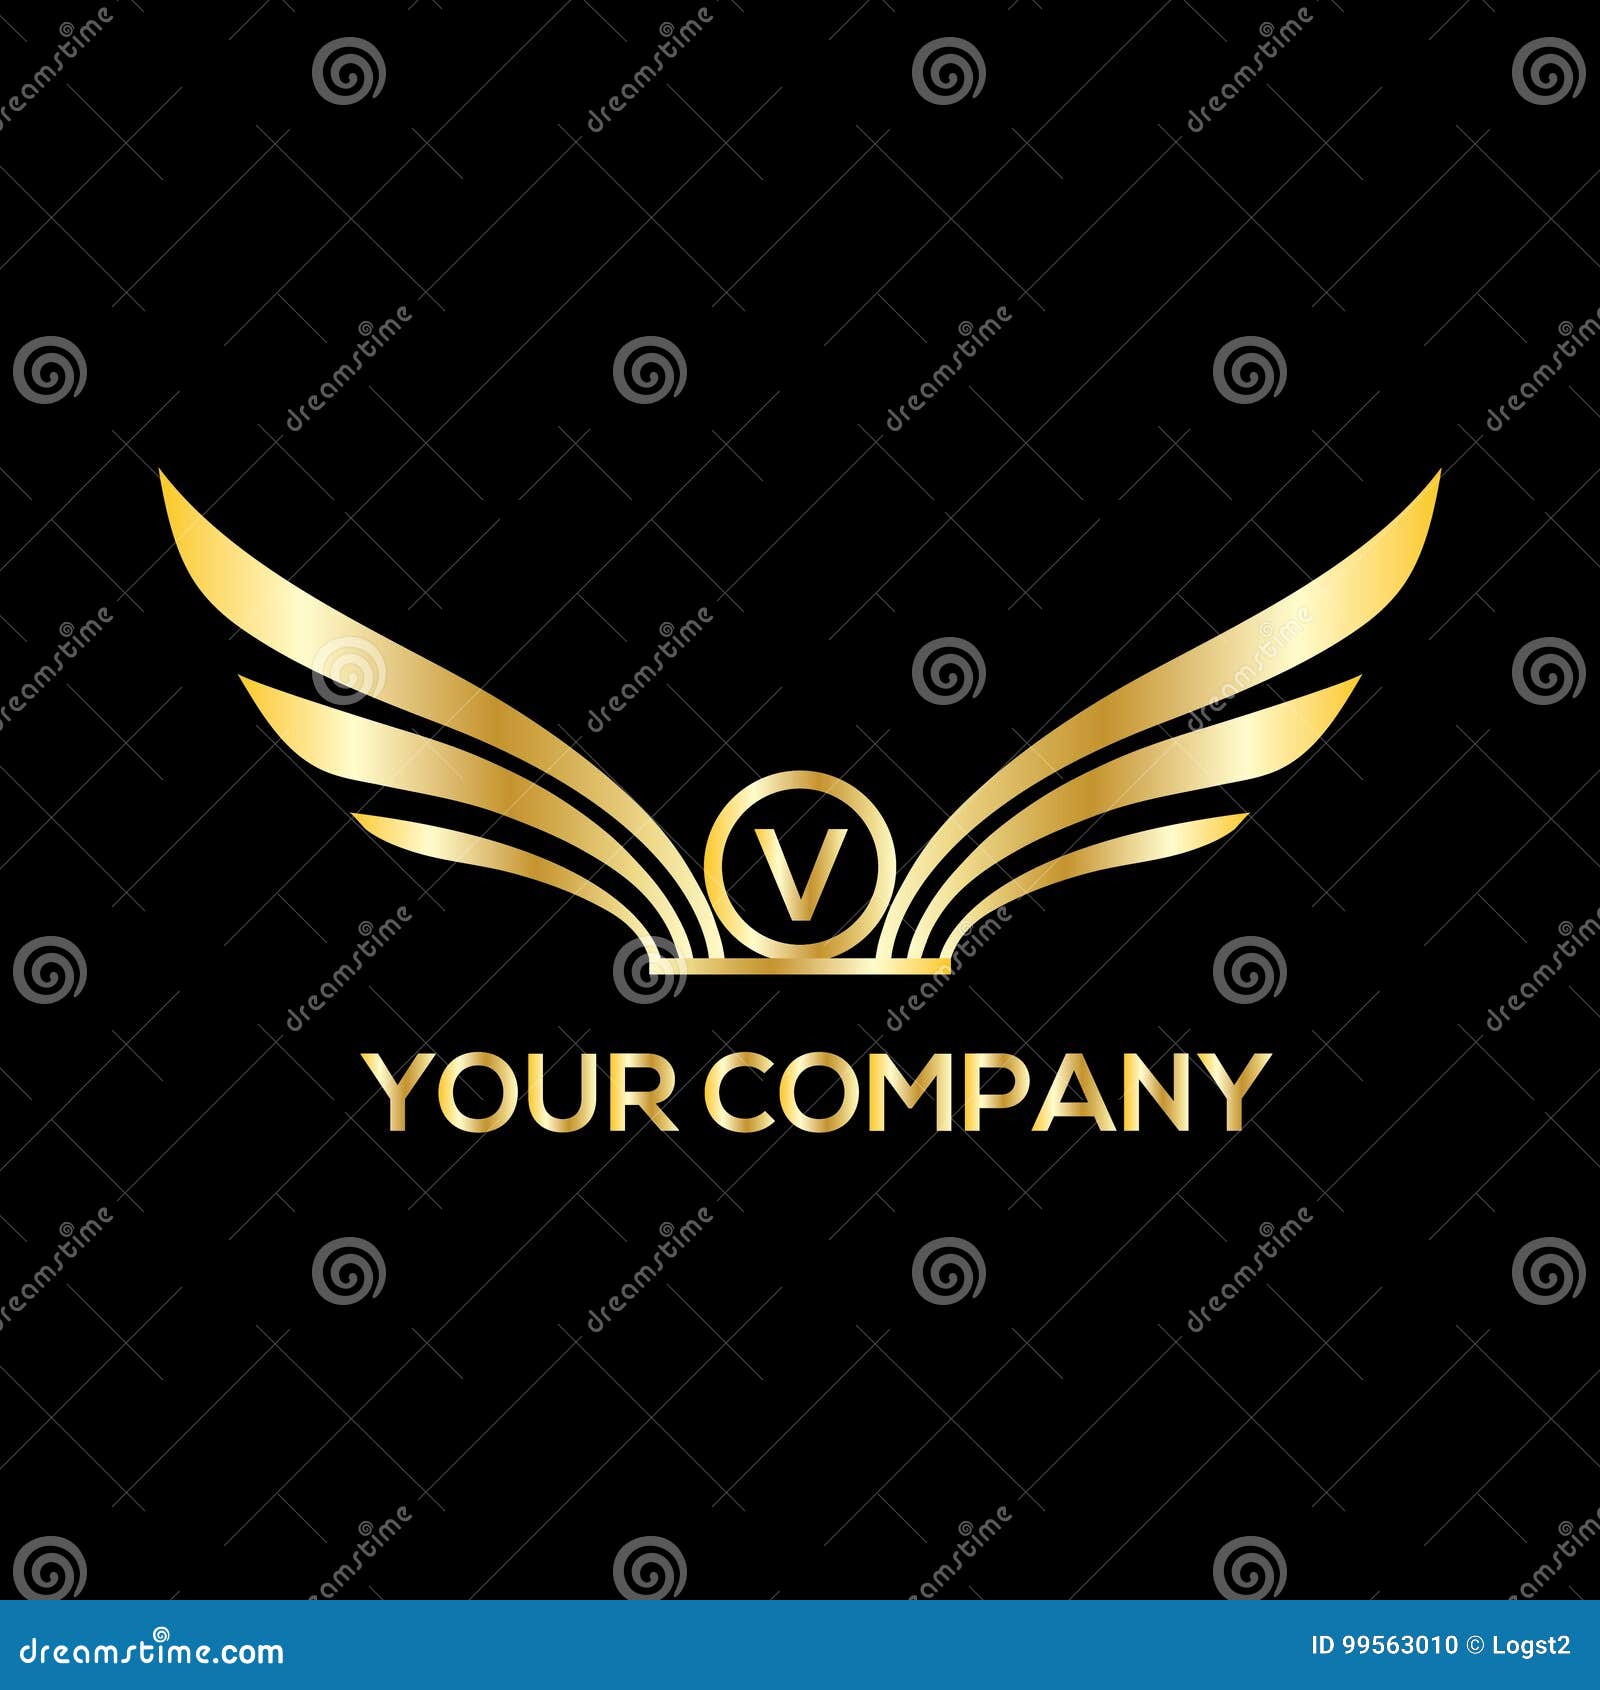 Premium Vector  Lv, vl, l, v letters abstract logo monogram